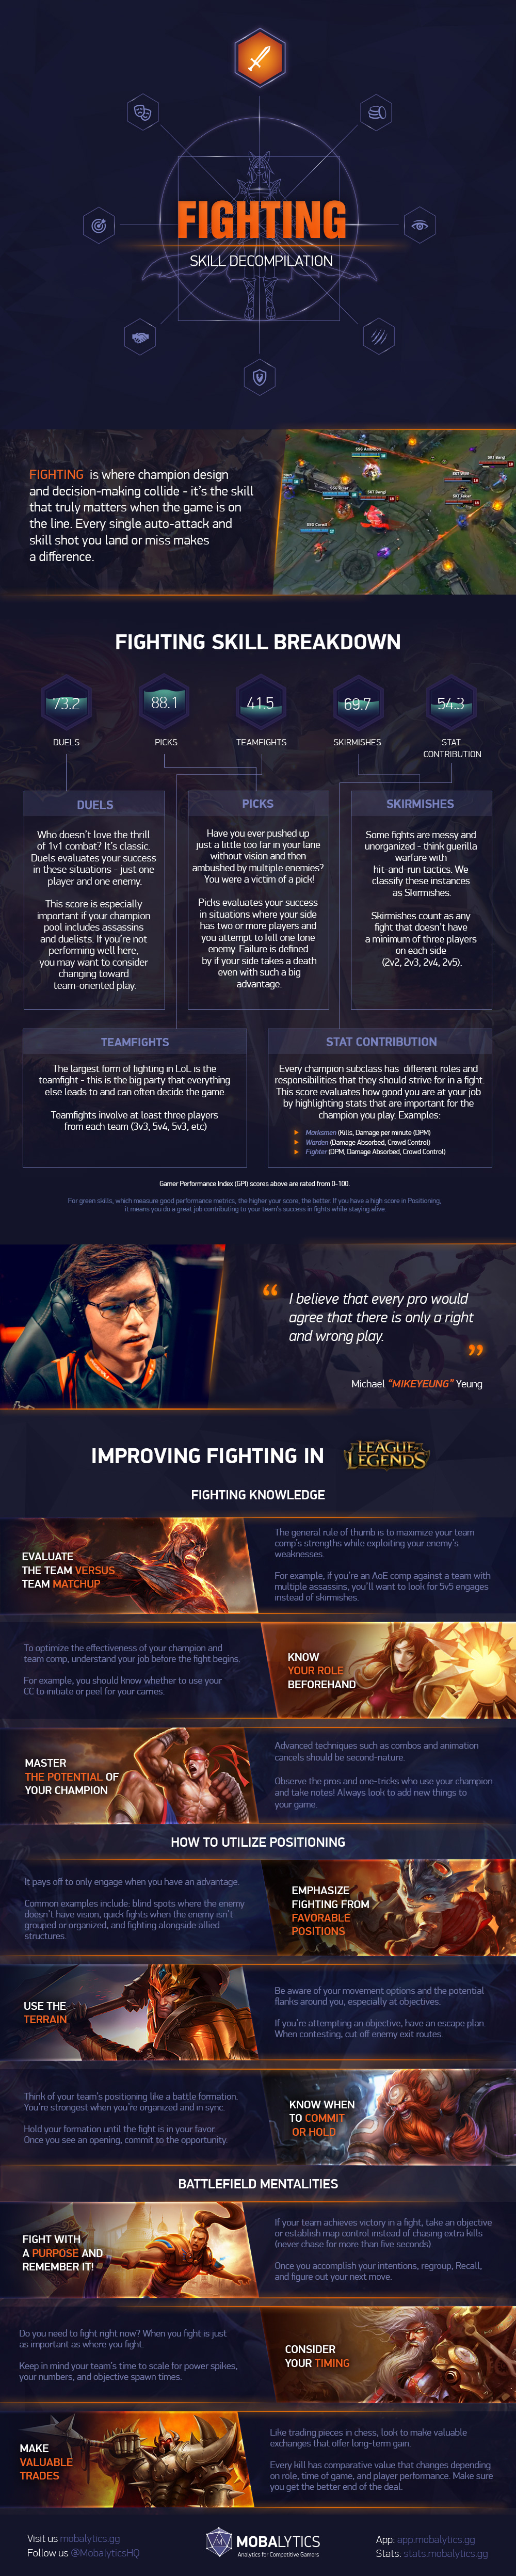 Fighting Infographic 2018